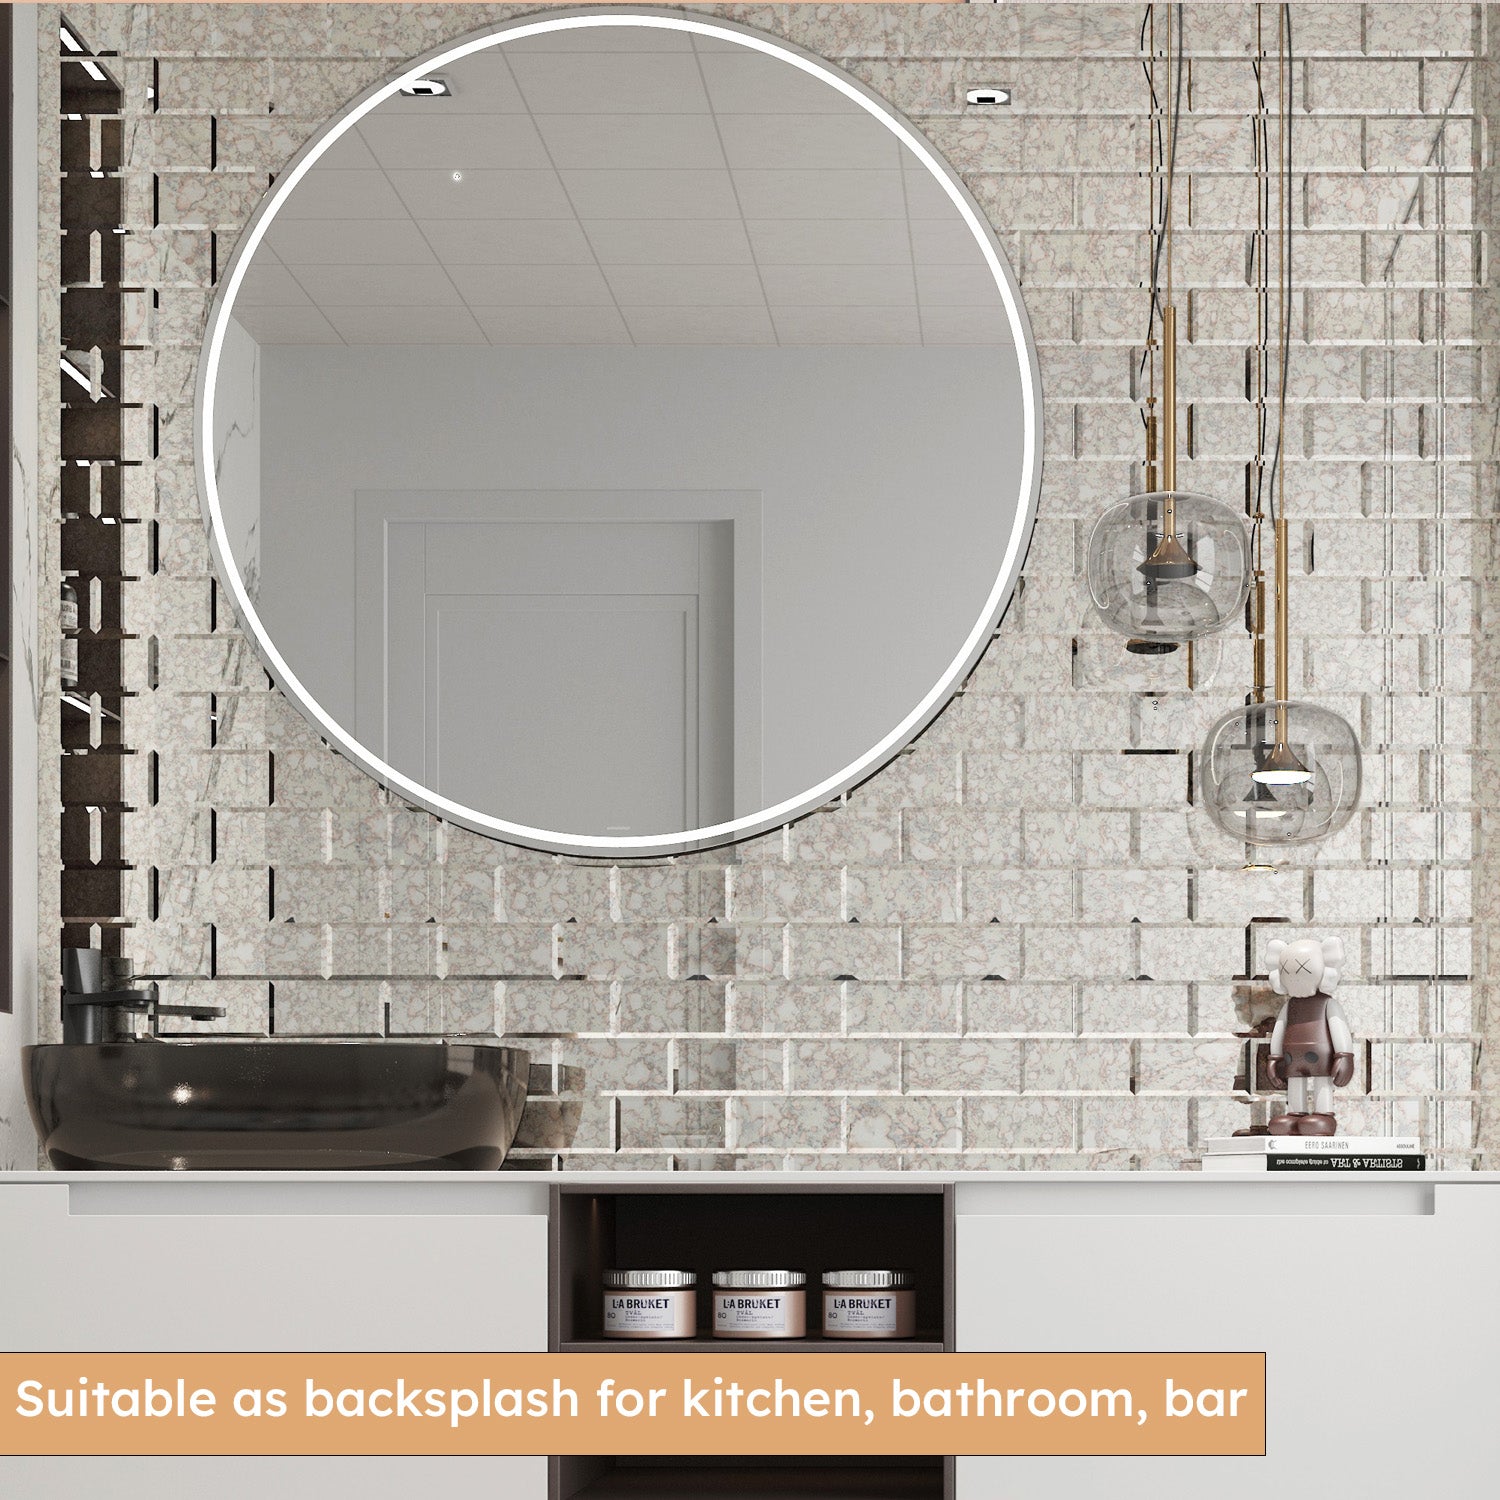 Antique Mirror Backsplash Subway Tiles 3x6 Inch Peel and Stick for Kitchen Bathroom Pack of 40 Pcs